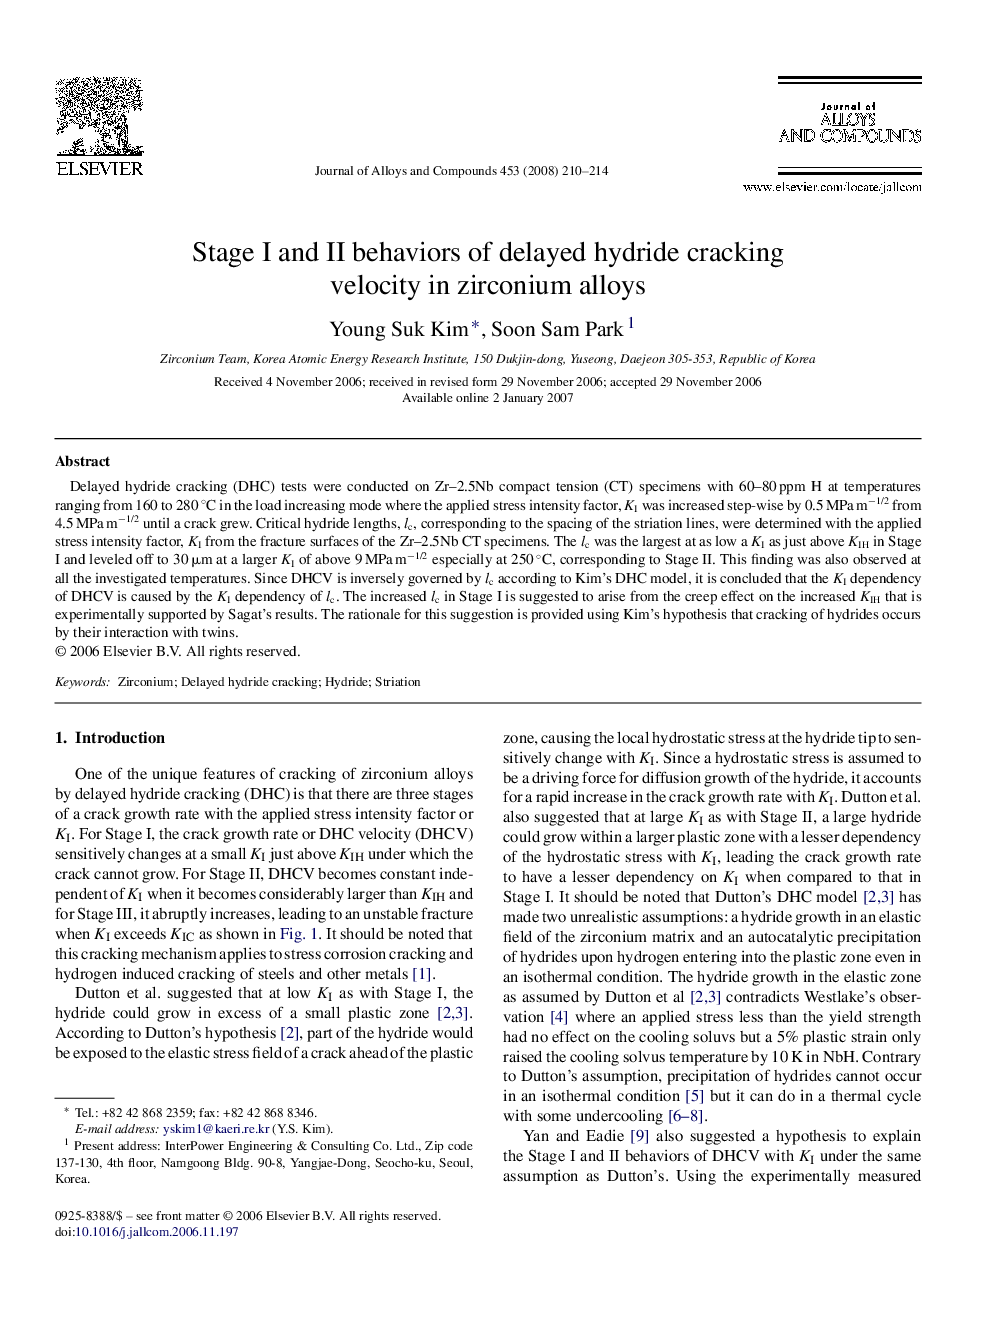 Stage I and II behaviors of delayed hydride cracking velocity in zirconium alloys